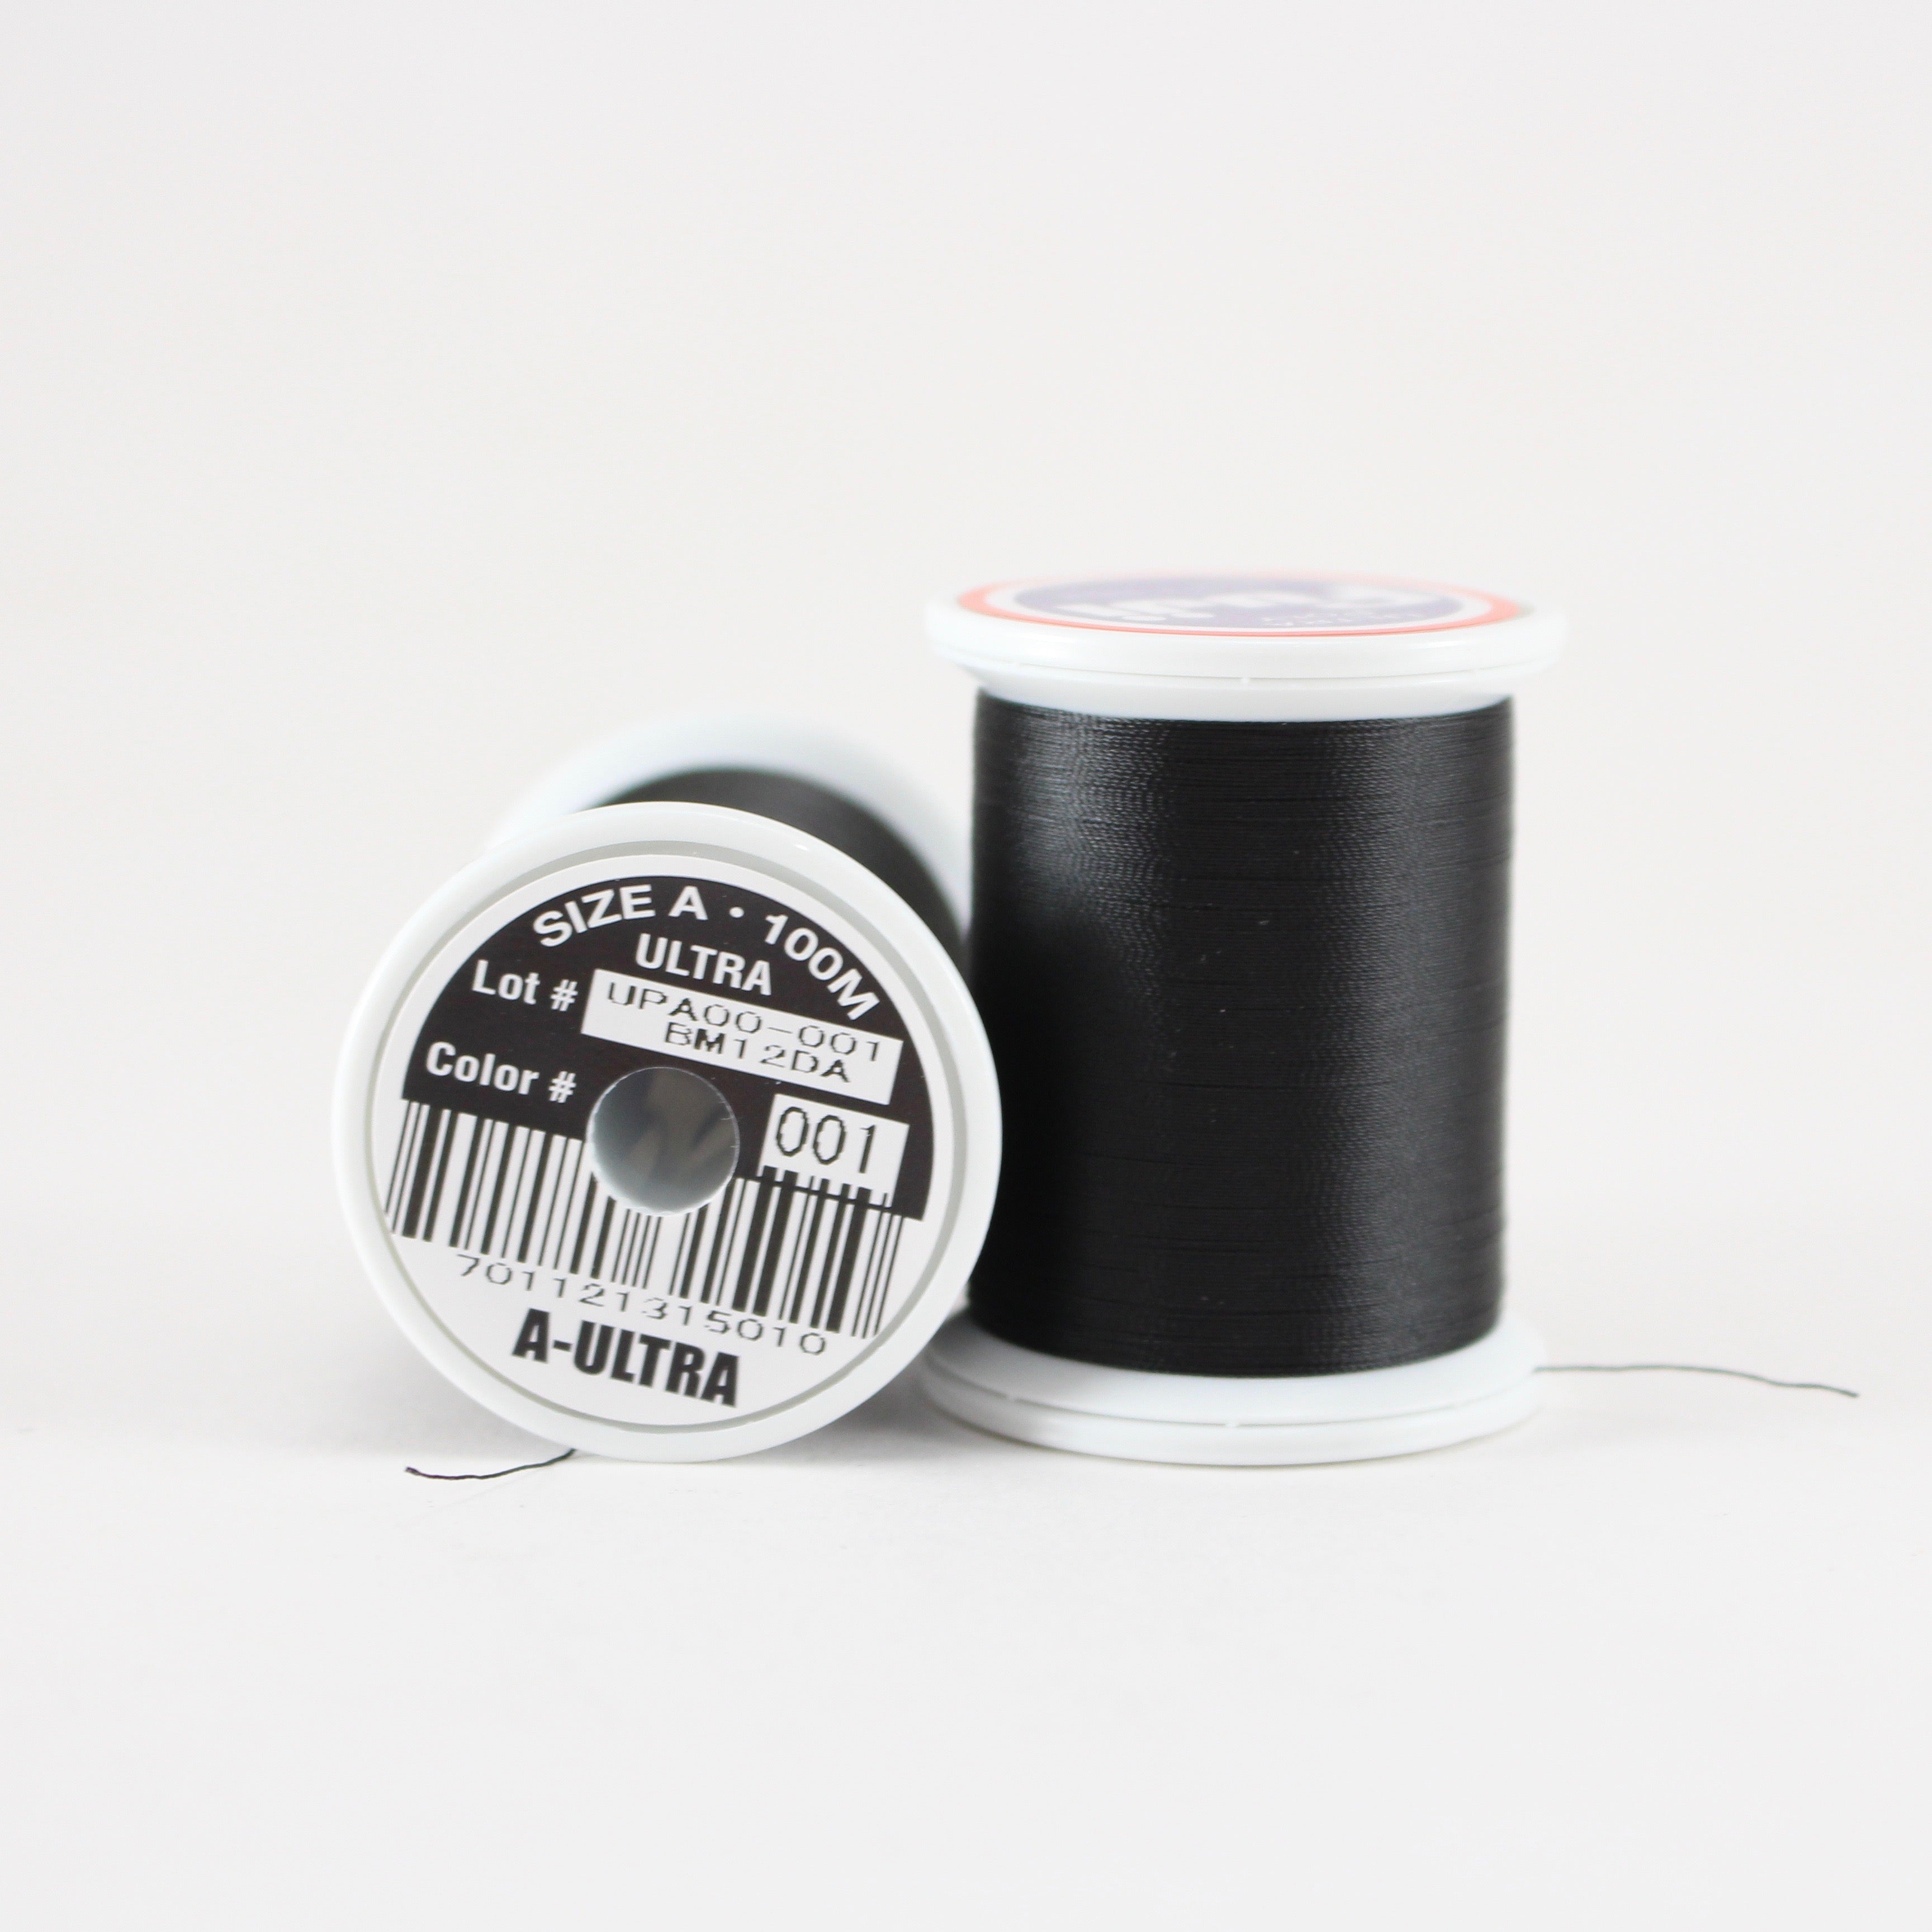 Fuji Ultra Poly rod wrapping thread in Garnet #007 (Size A 100m spool)